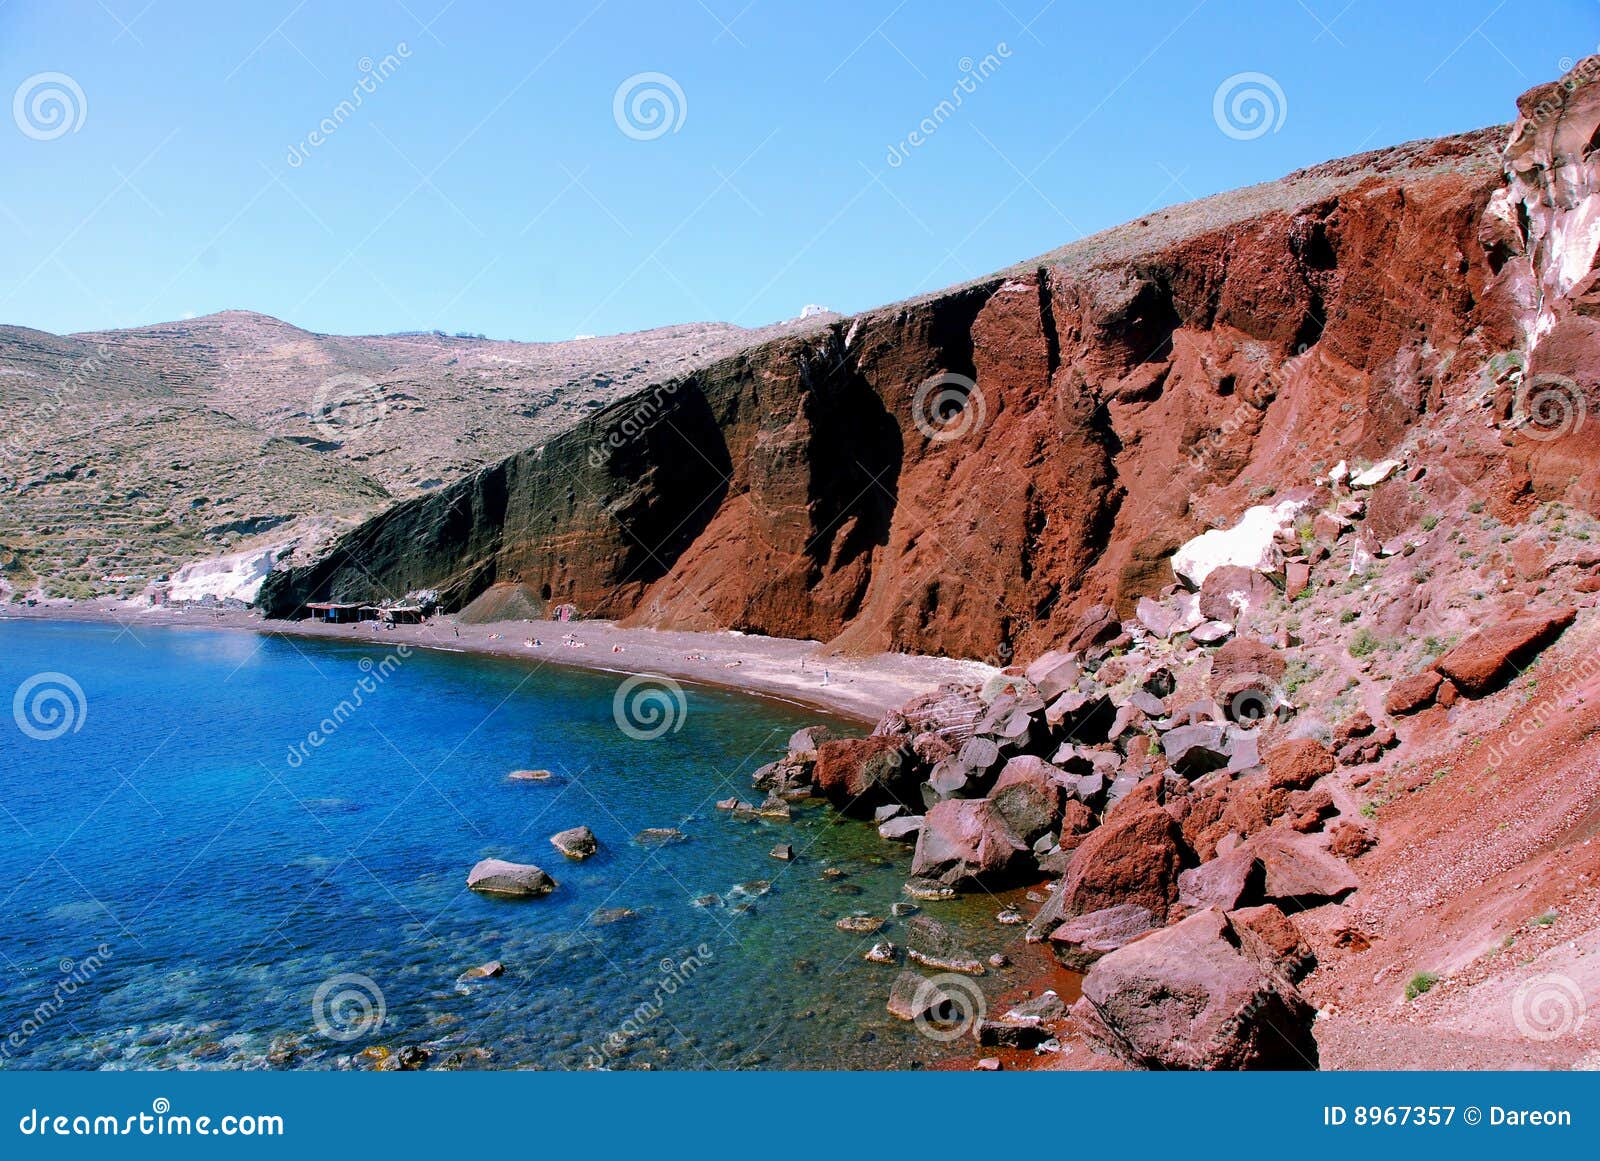 red rocks, beach - santorini island, greece